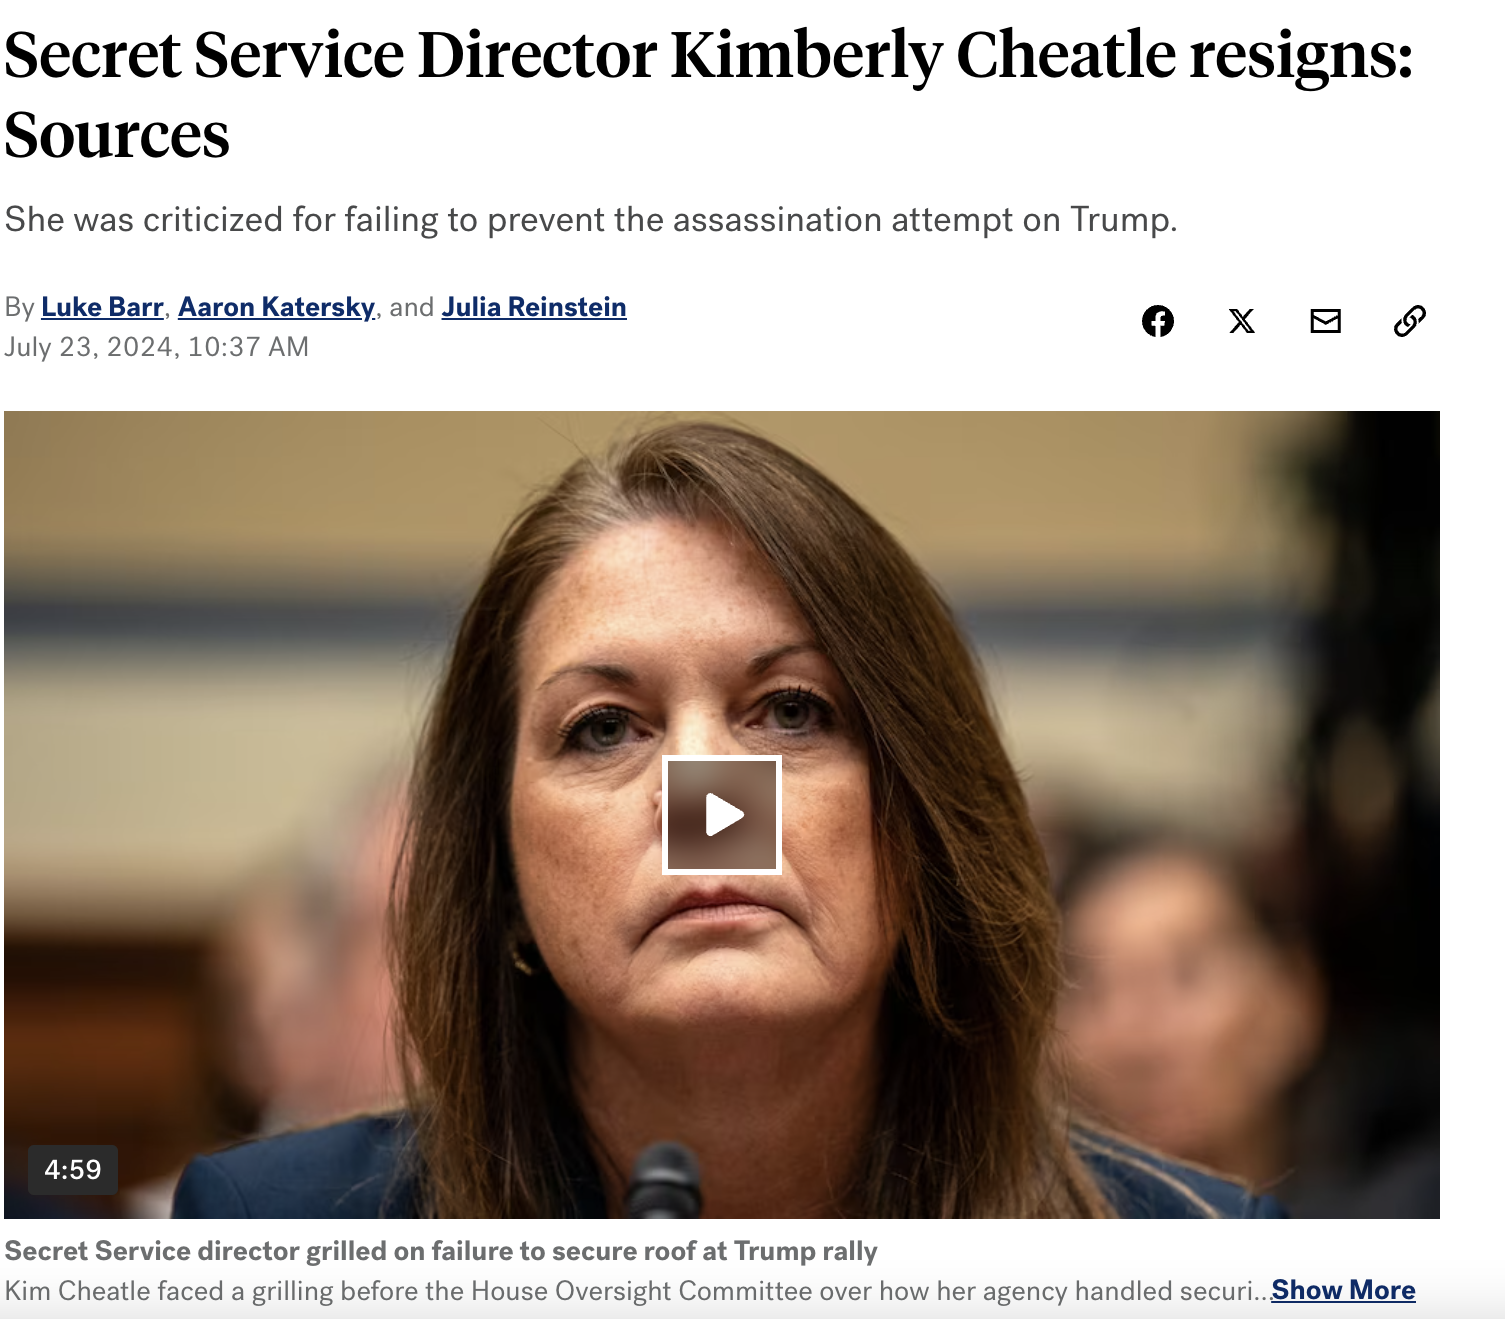 REPORT: Secret Service Director Kimberly Cheatle Resigns